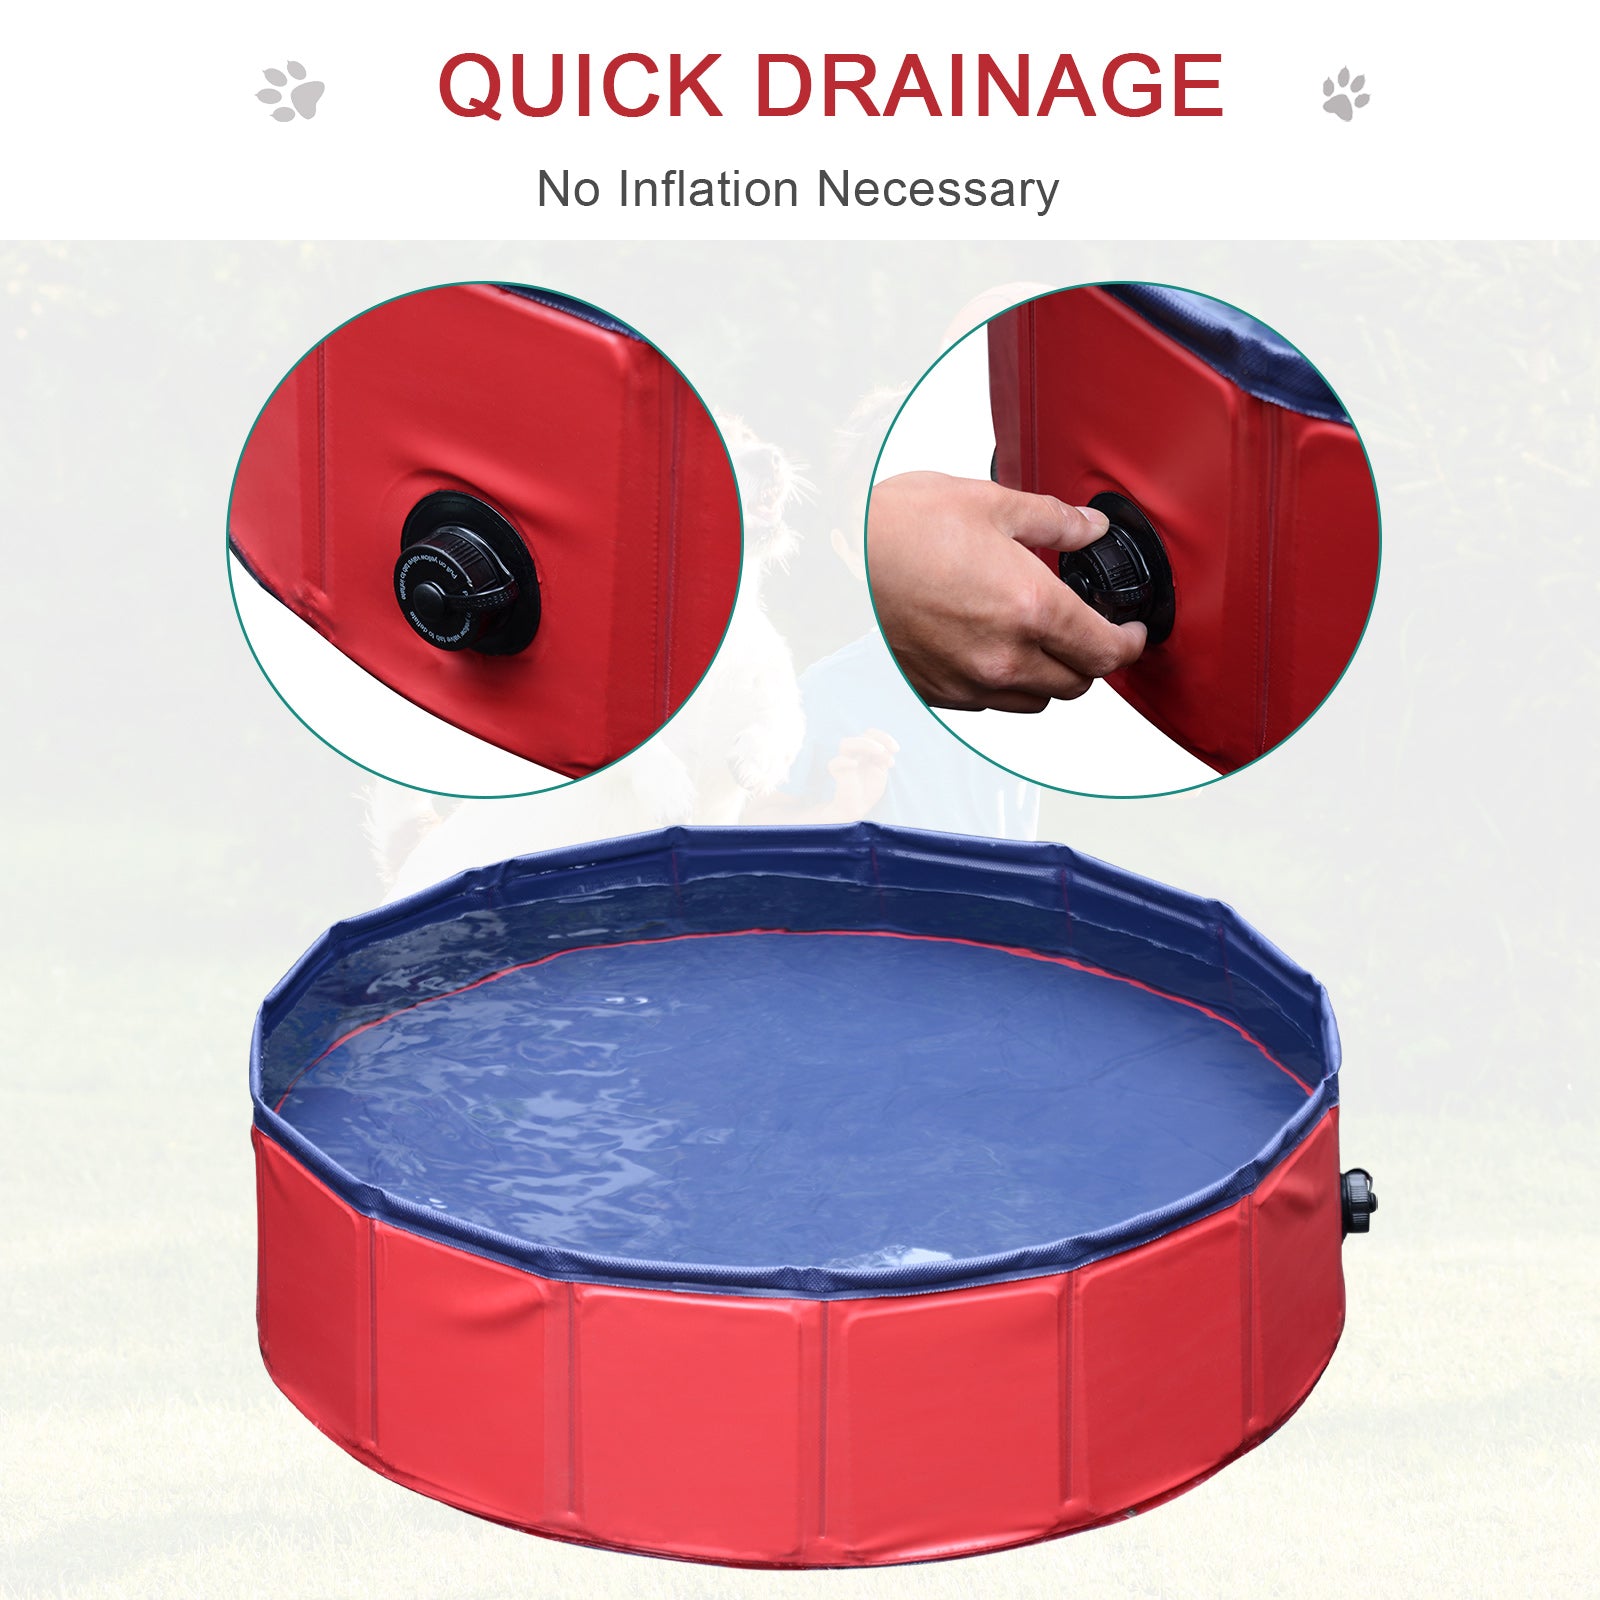 PawHut Pet Swimming Pool, Foldable, 80 cm Diameter-Red - Inspirely